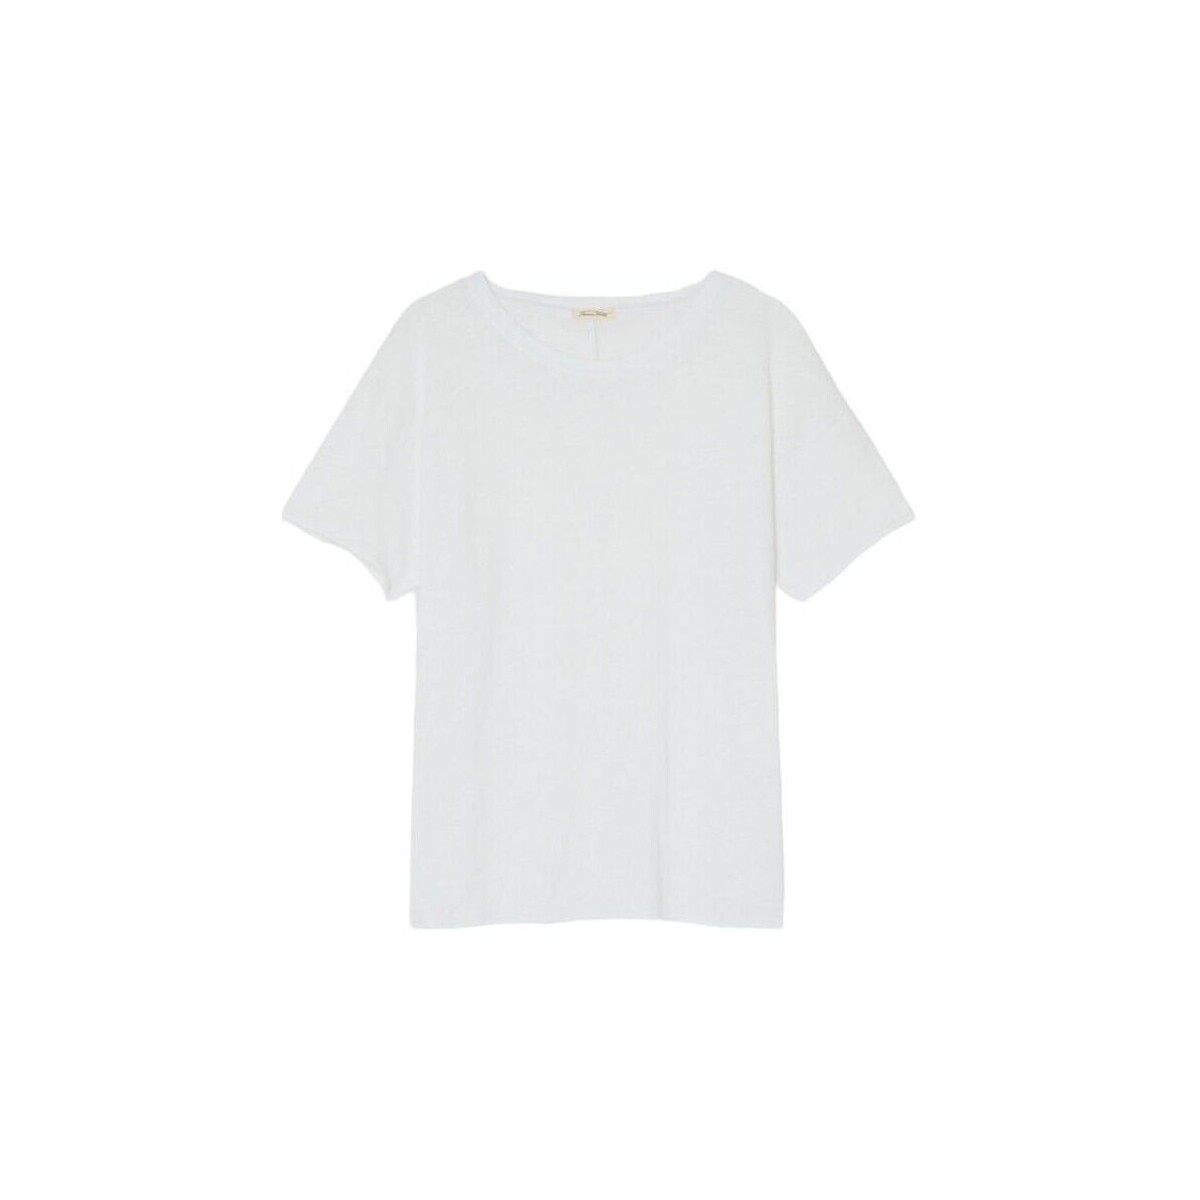 textil Mujer Camisetas manga corta American Vintage Camiseta Sonoma Mujer White Blanco